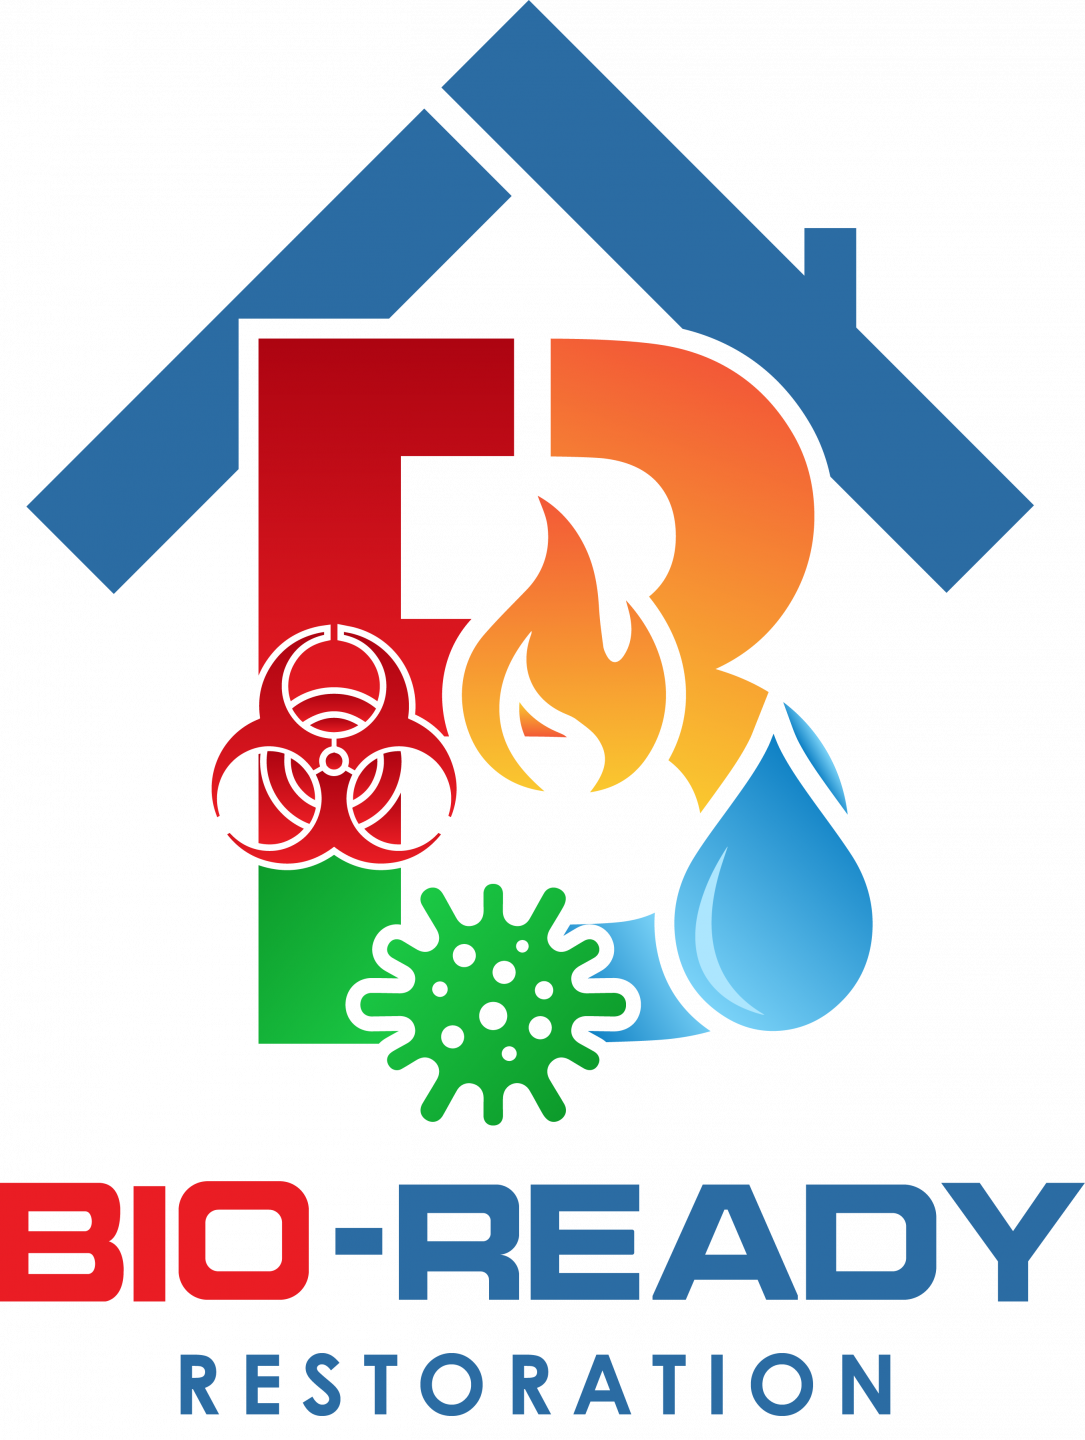 Fire Restoration Company  Bio-Ready Restoration Logo